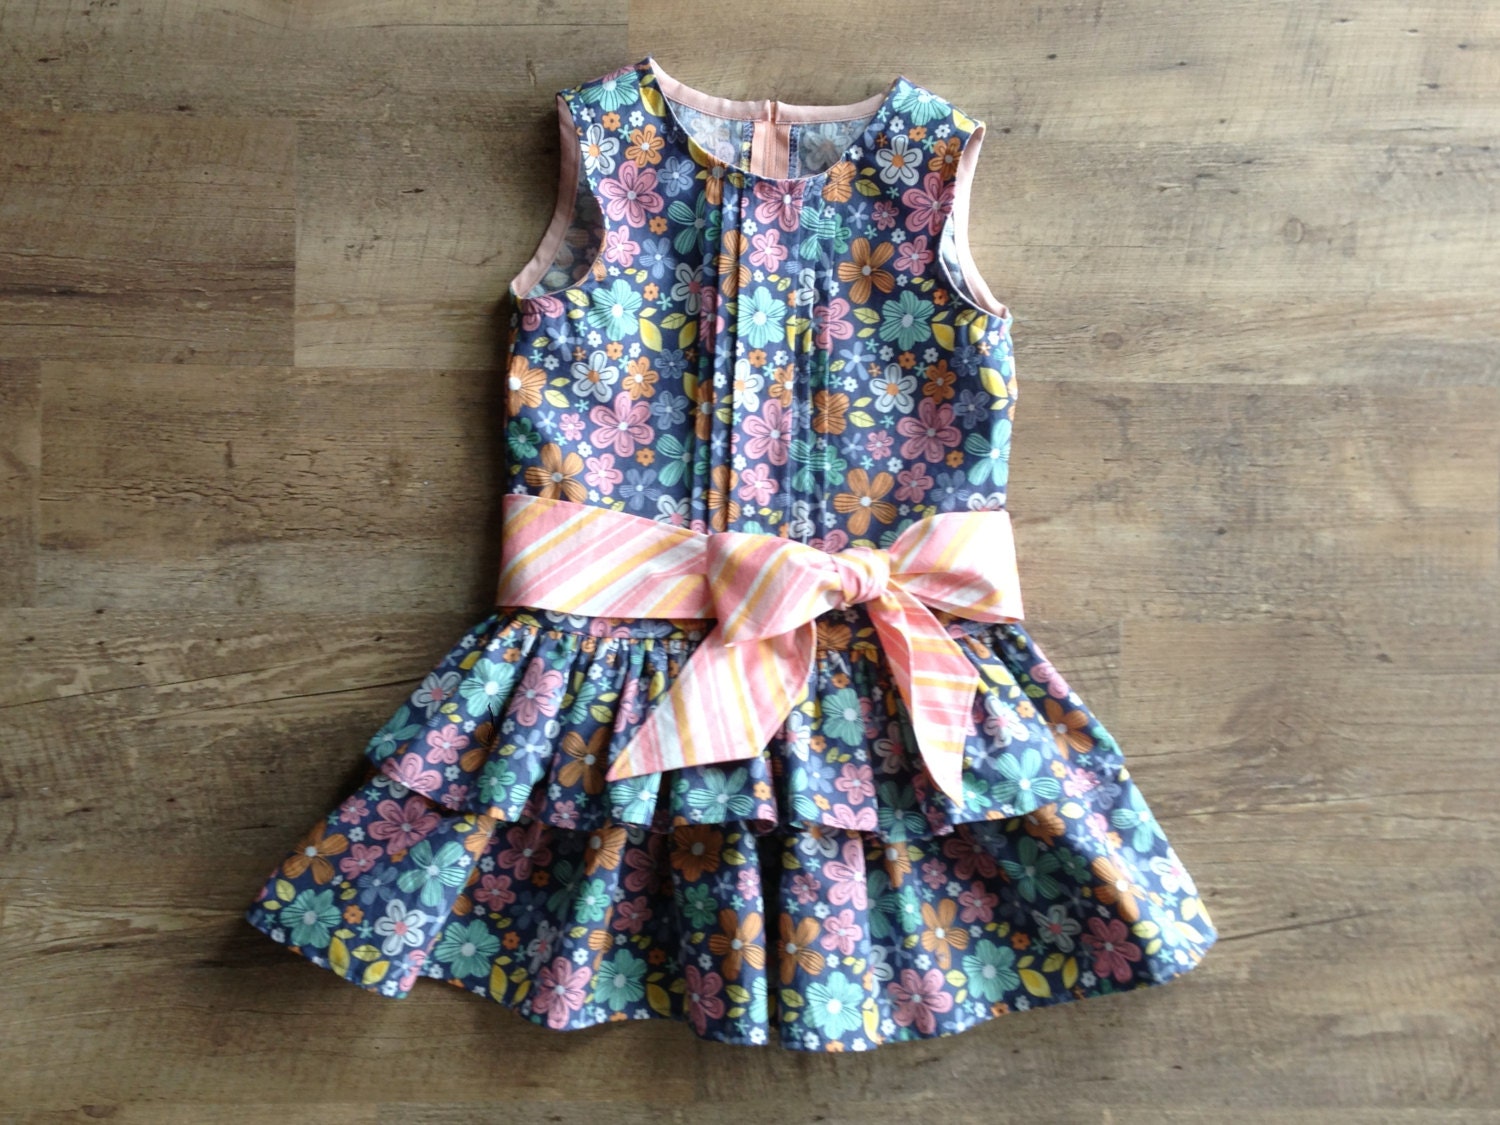 Sweetie Pie Drop Waist Dress PDF sewing pattern and tutorial